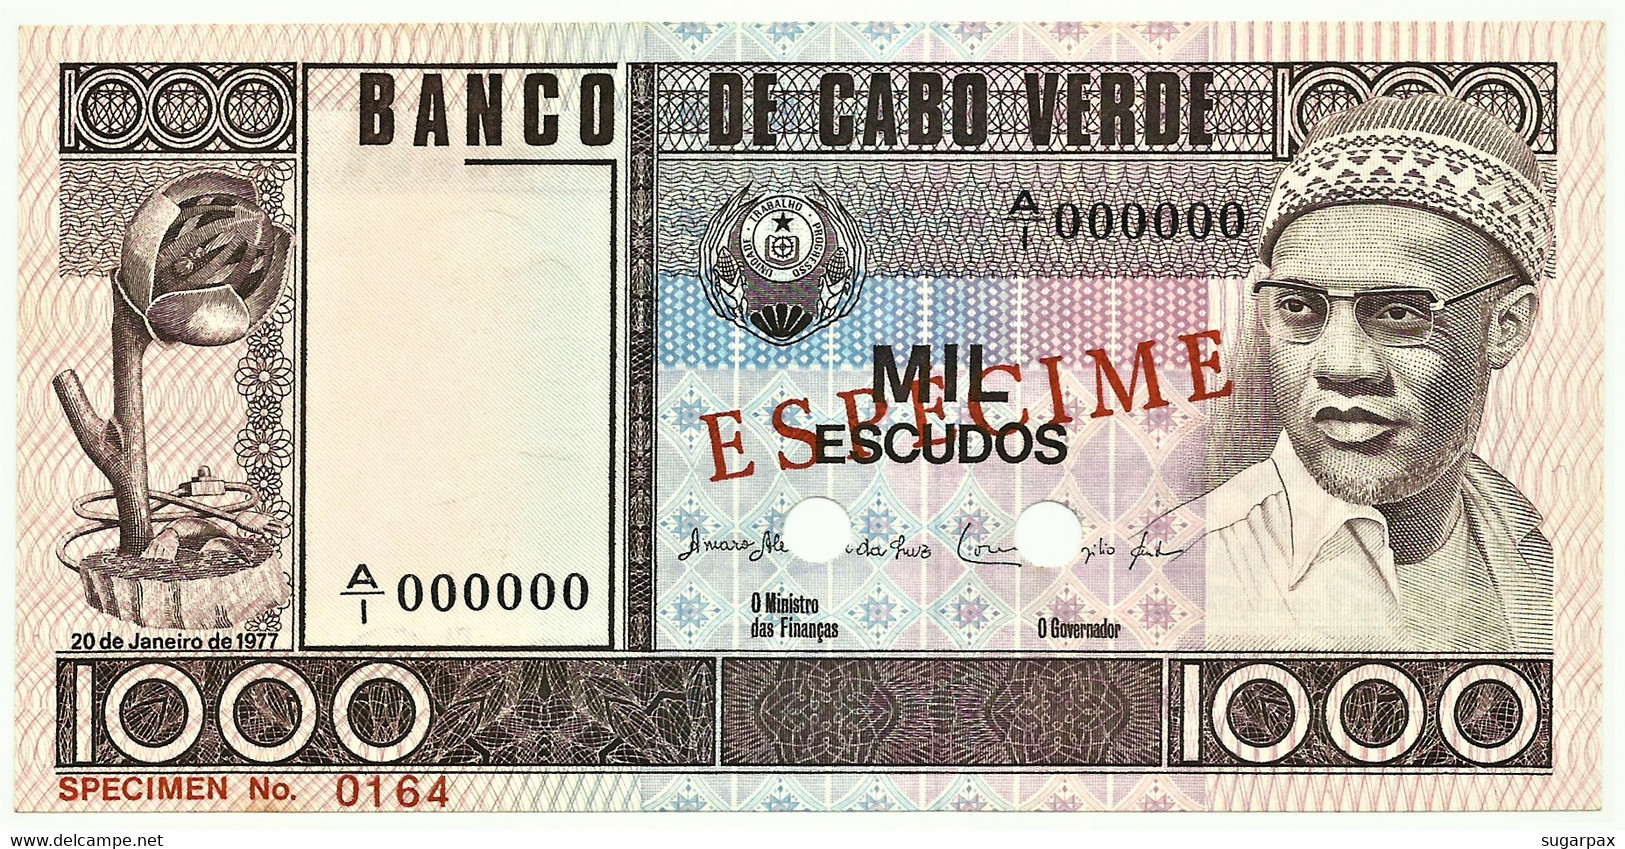 CAPE VERDE - 1000 ESCUDOS - 20.01.1977 - Pick 56.s1 - Unc. - ESPÉCIME In RED - 1.000 - Cape Verde